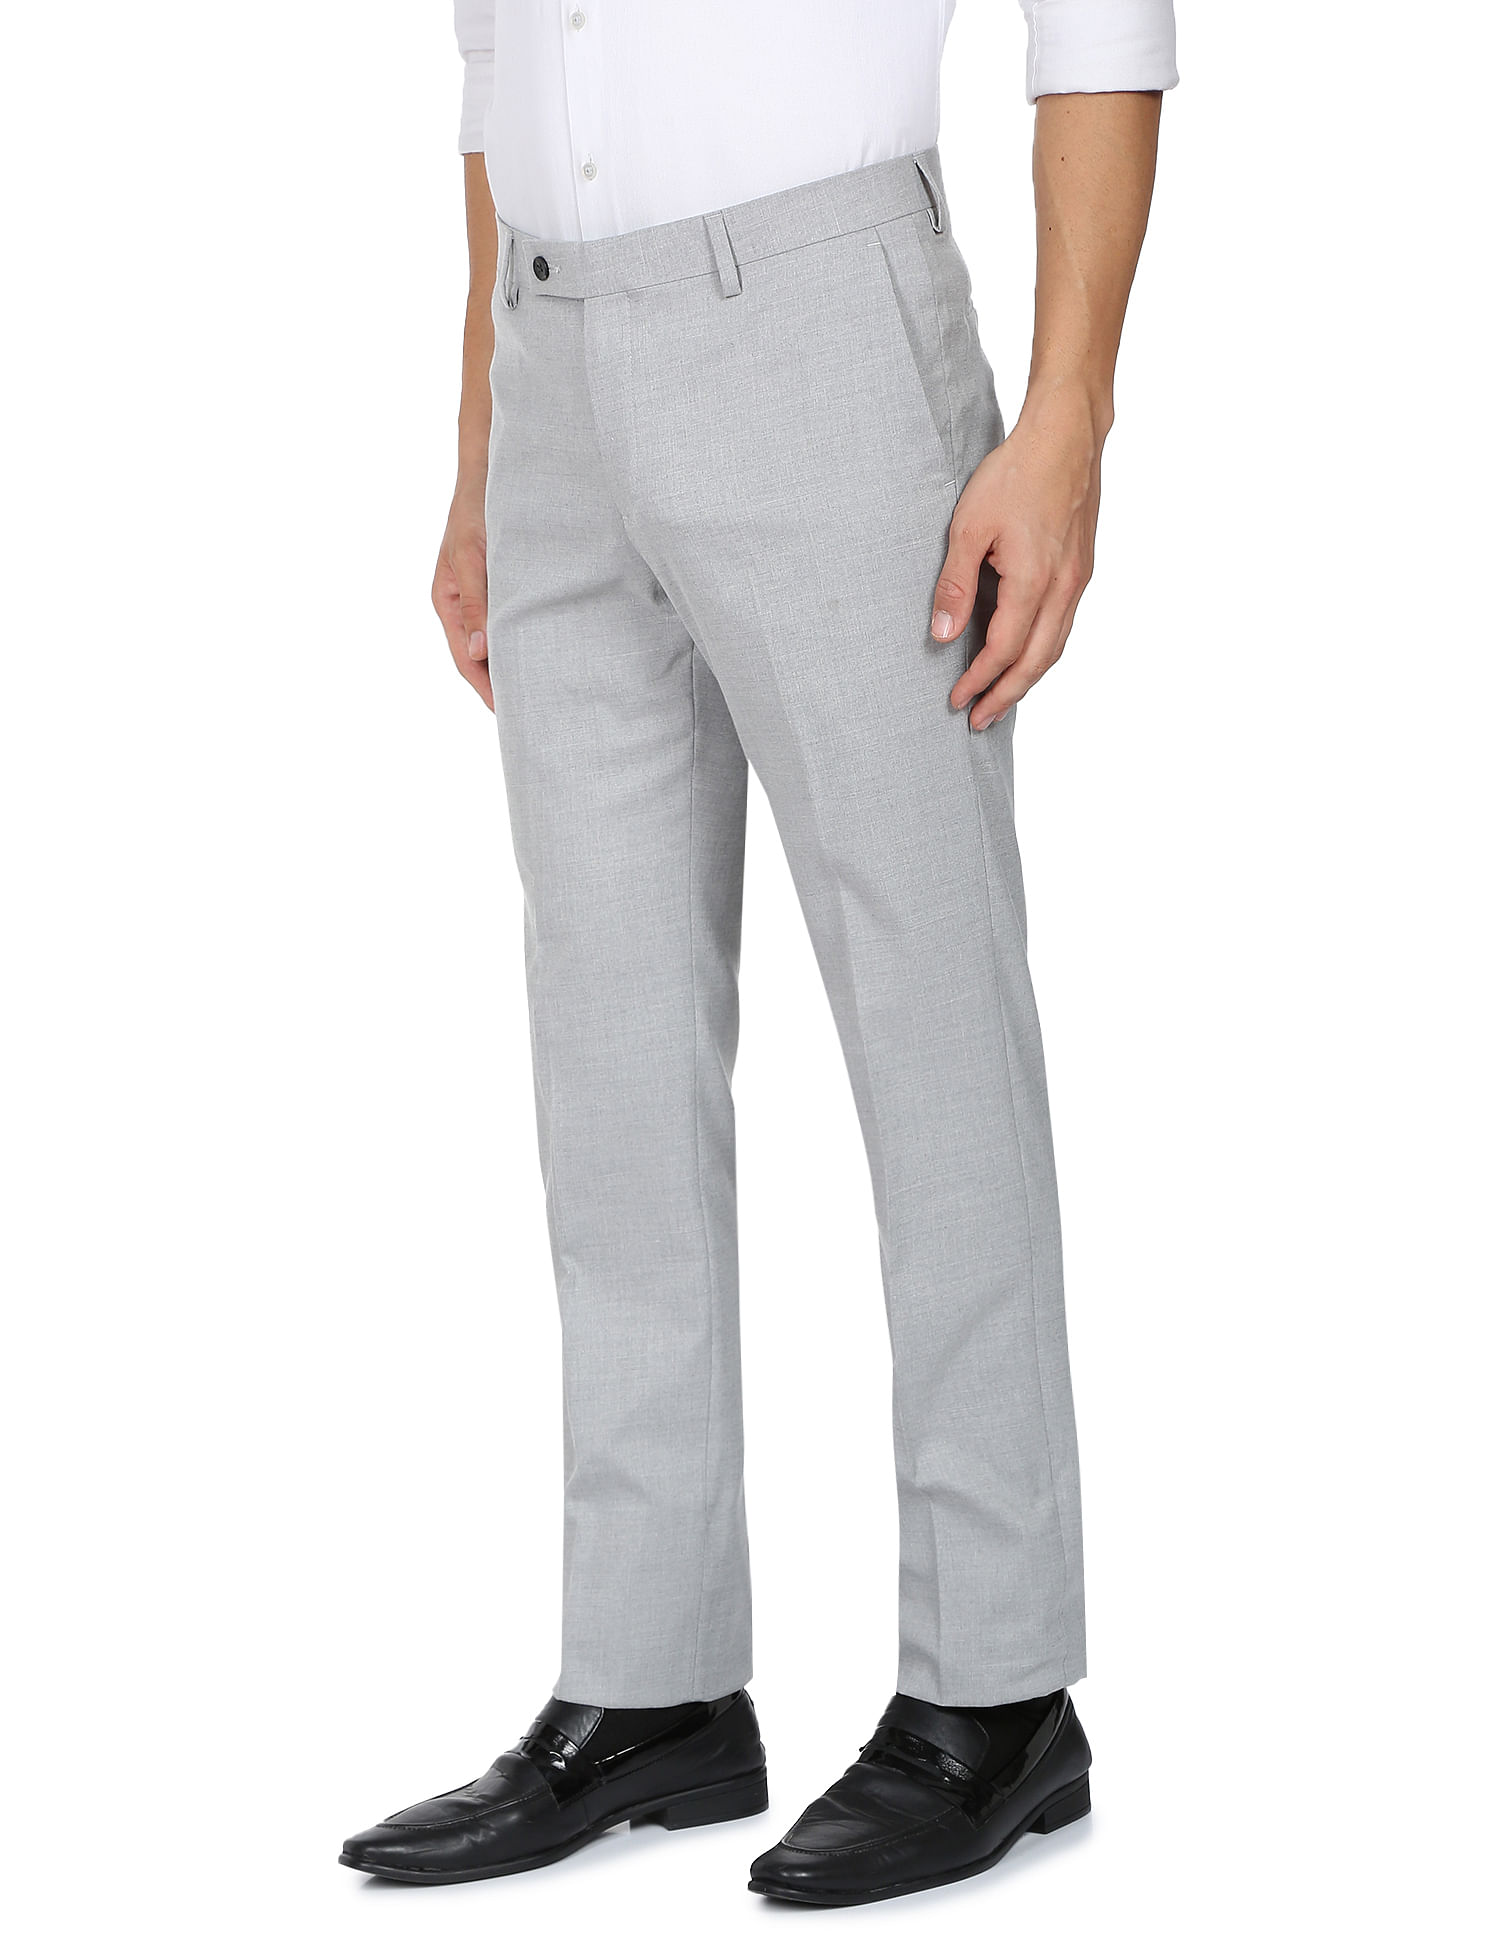 Buy Arrow Men's Smart Flex Skinny Trousers (ASAFTR2493_Olive at Amazon.in